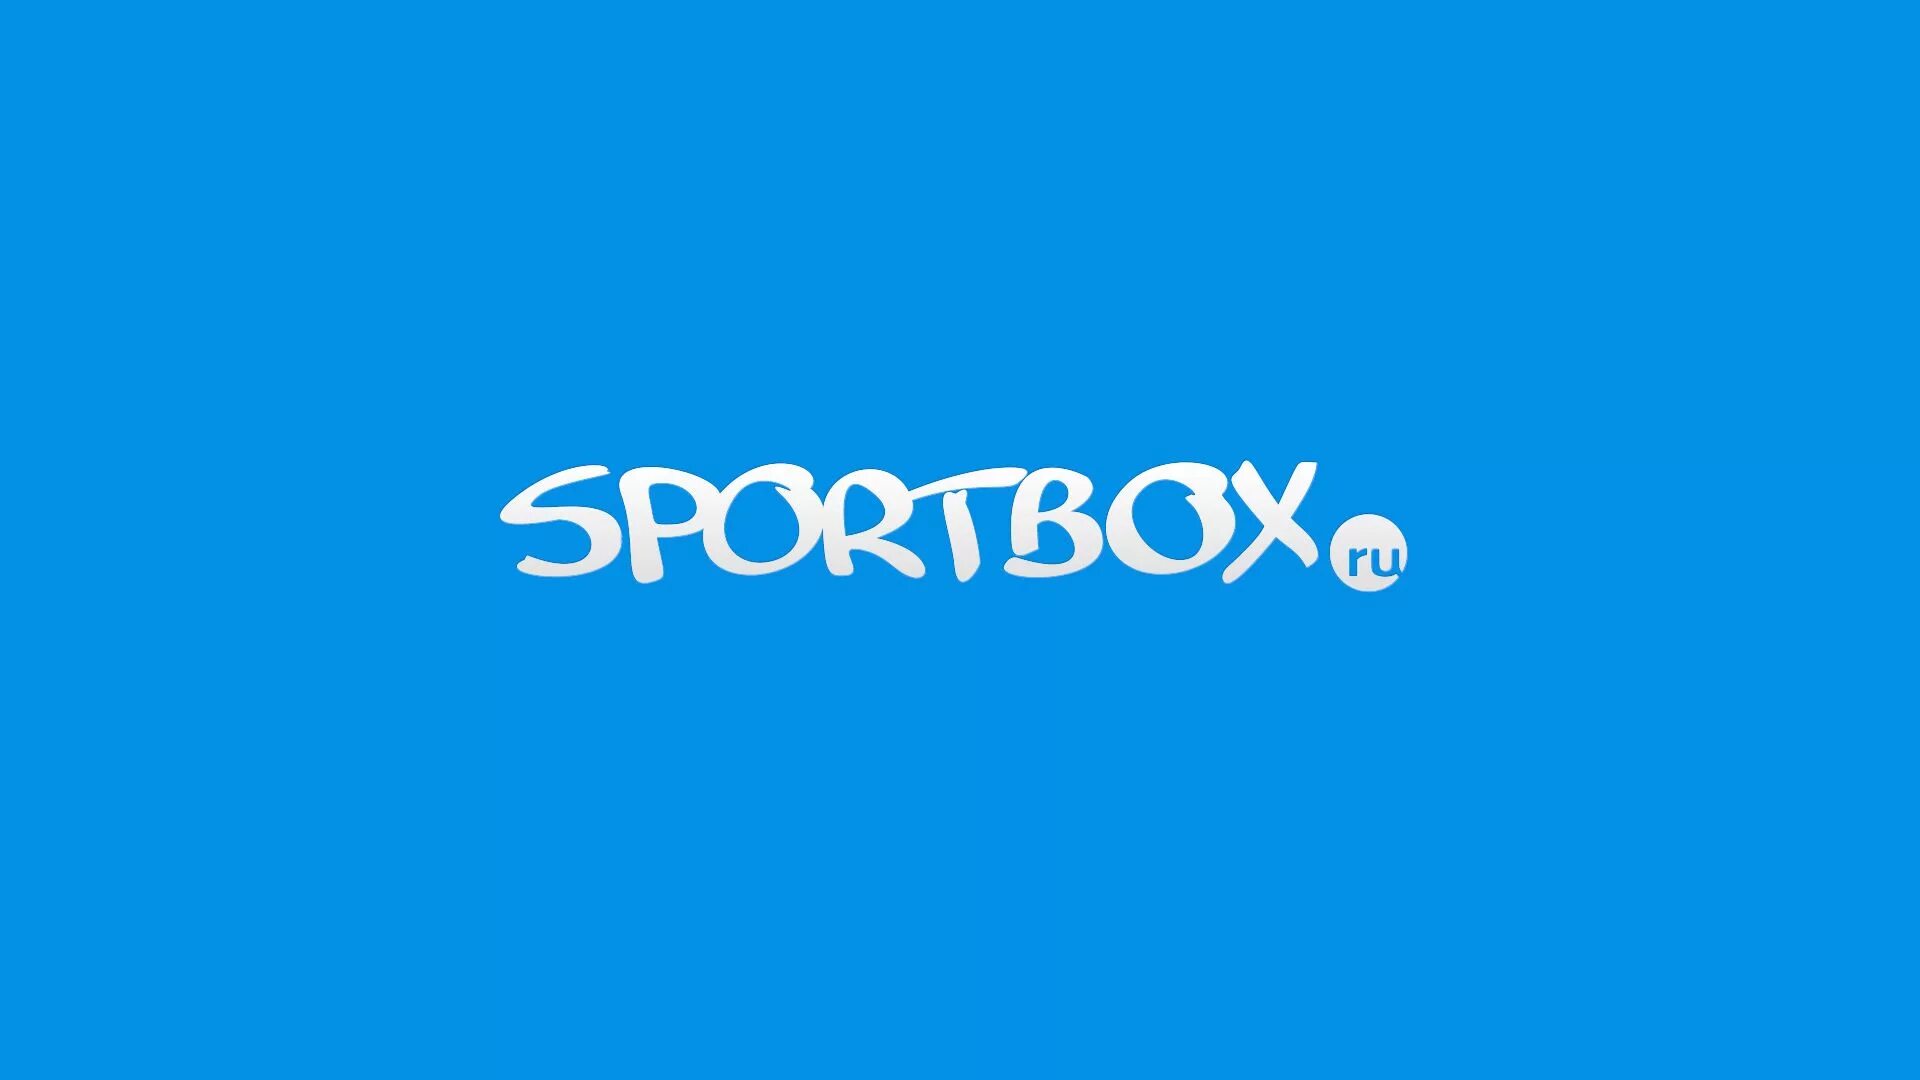 Sportbox ru спортивные. Спортбокс. Спортбокс лого. Спортмикс. Sportbox.ru.